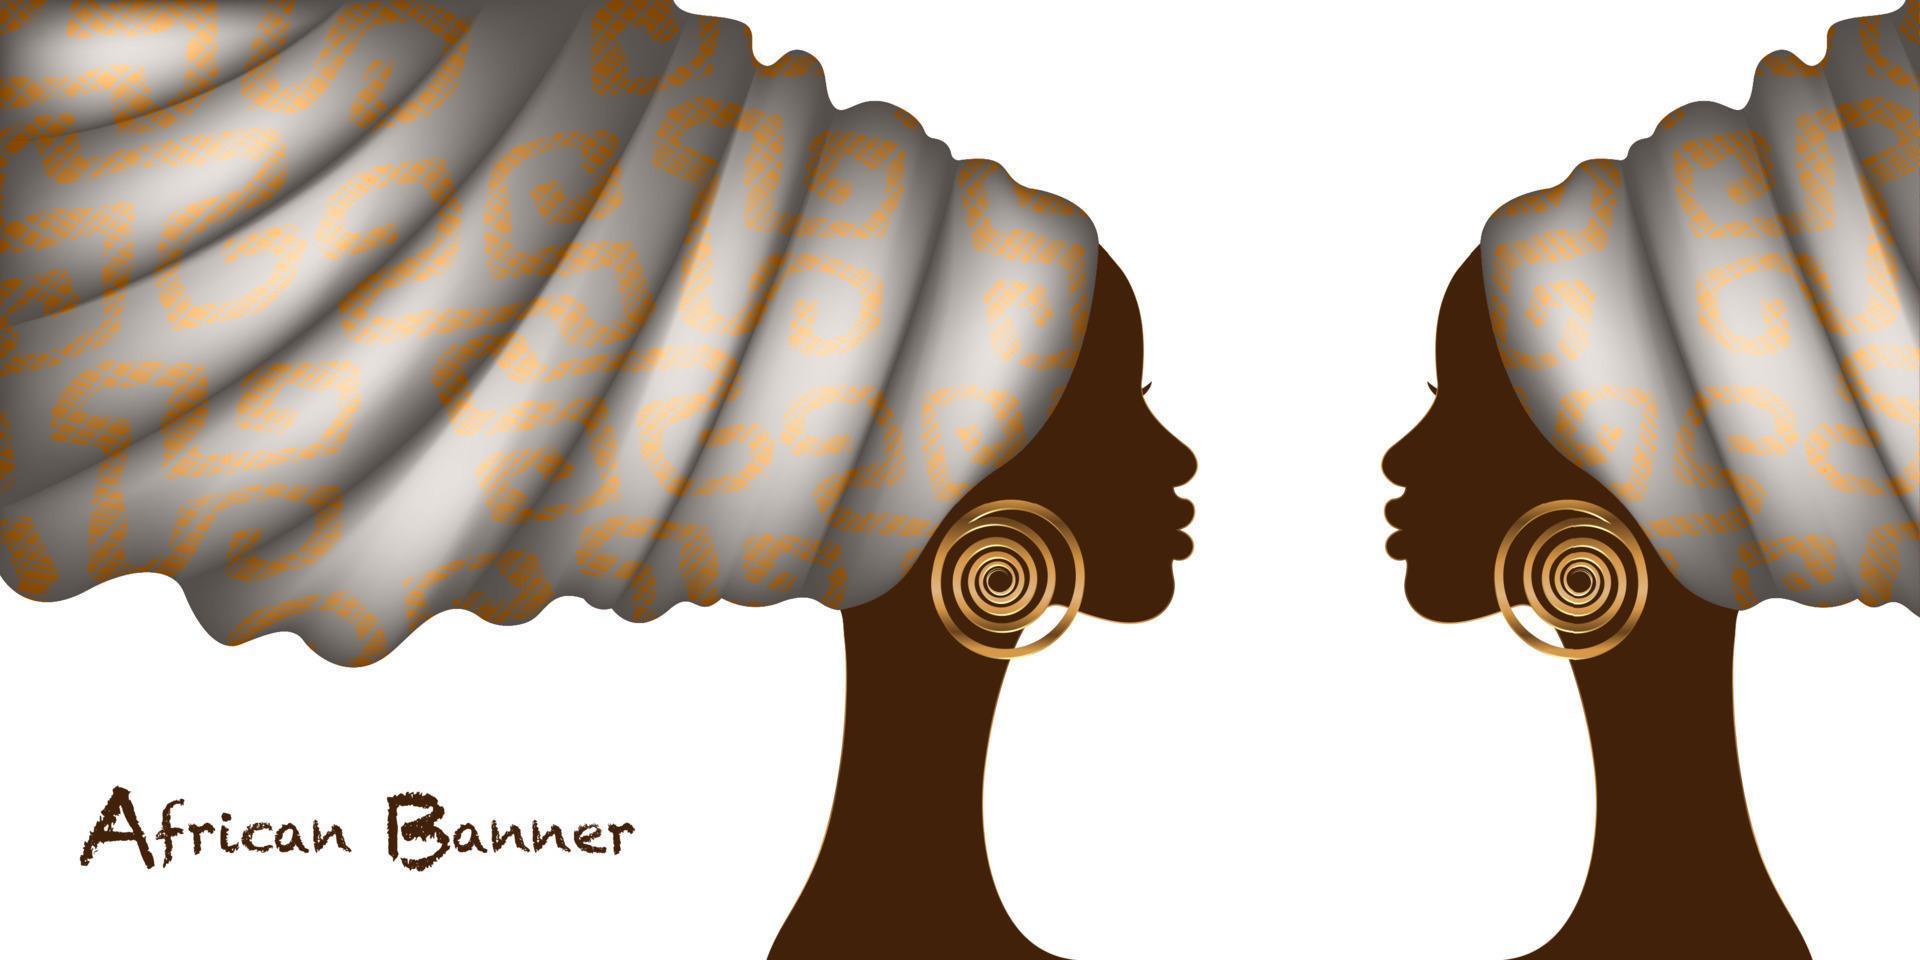 pancarta de mujeres africanas con turbante estampado de cera de moda, belleza de dos gemelos. retrato de mujer negra peinados afro, concepto de vestido de pelo. plantilla étnica de áfrica aislada sobre fondo blanco vector